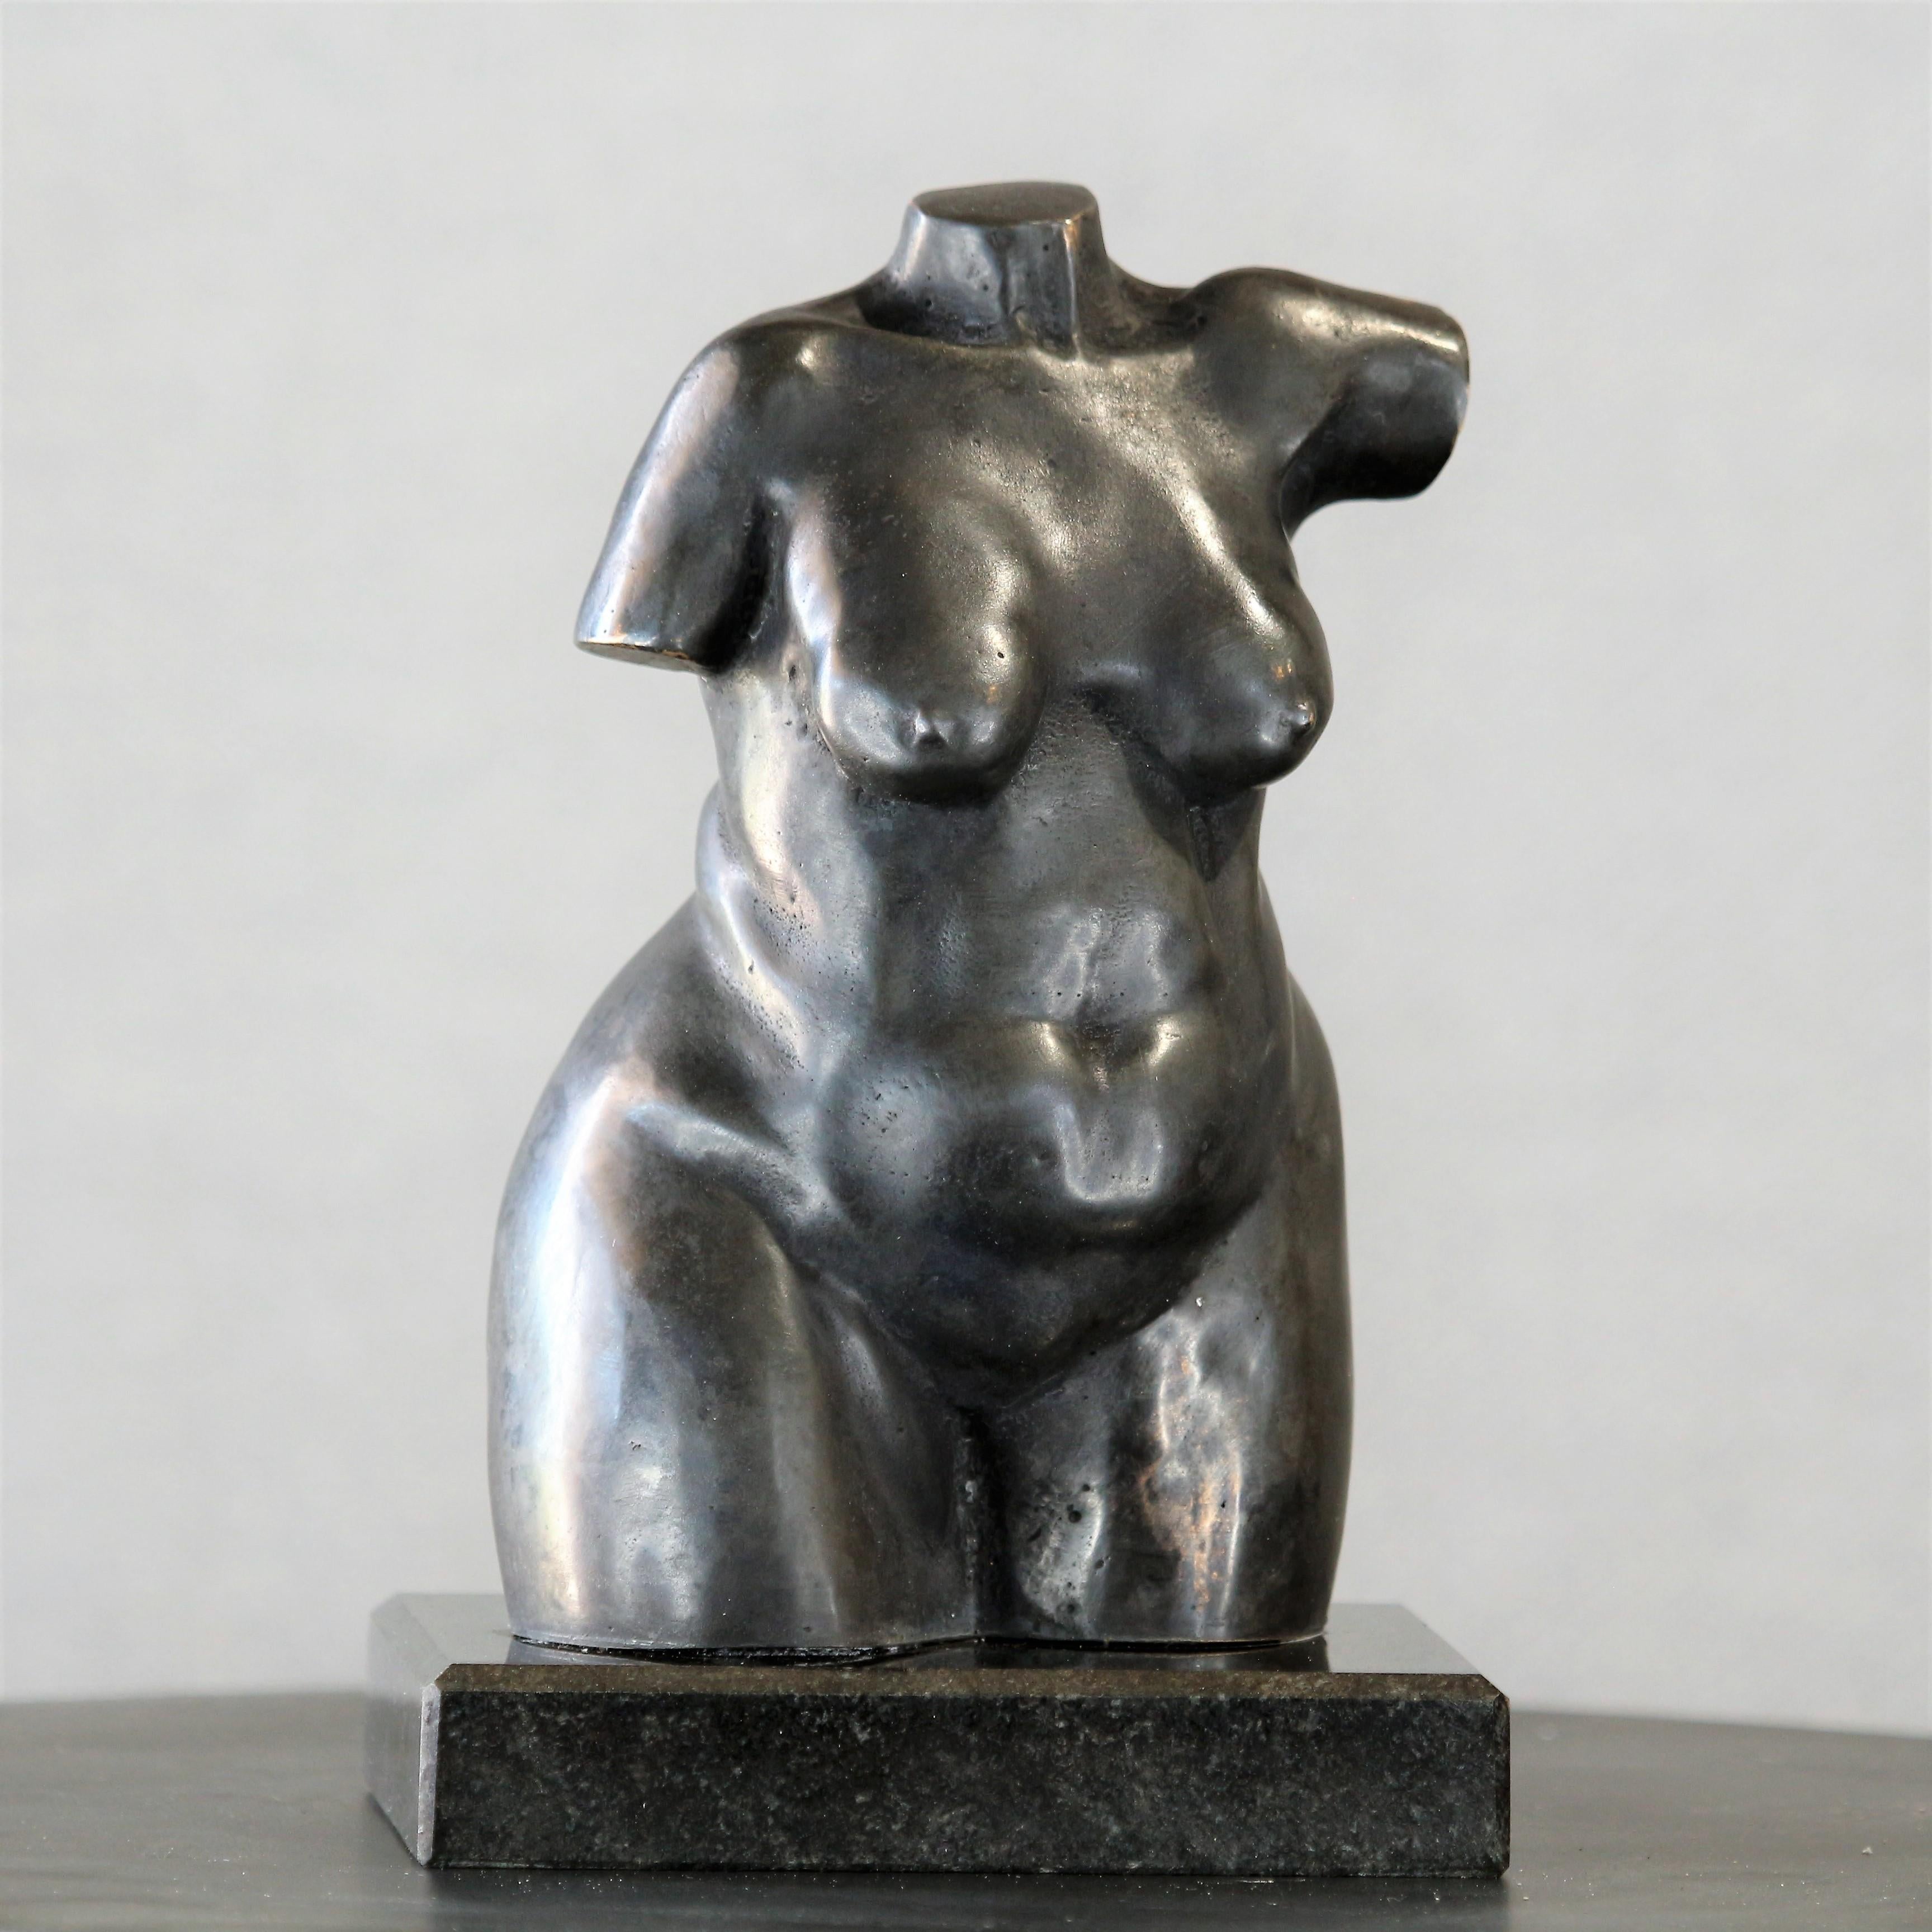 Torse de femme féminine - Petite sculpture figurative de femme en bronze patiné brun foncé